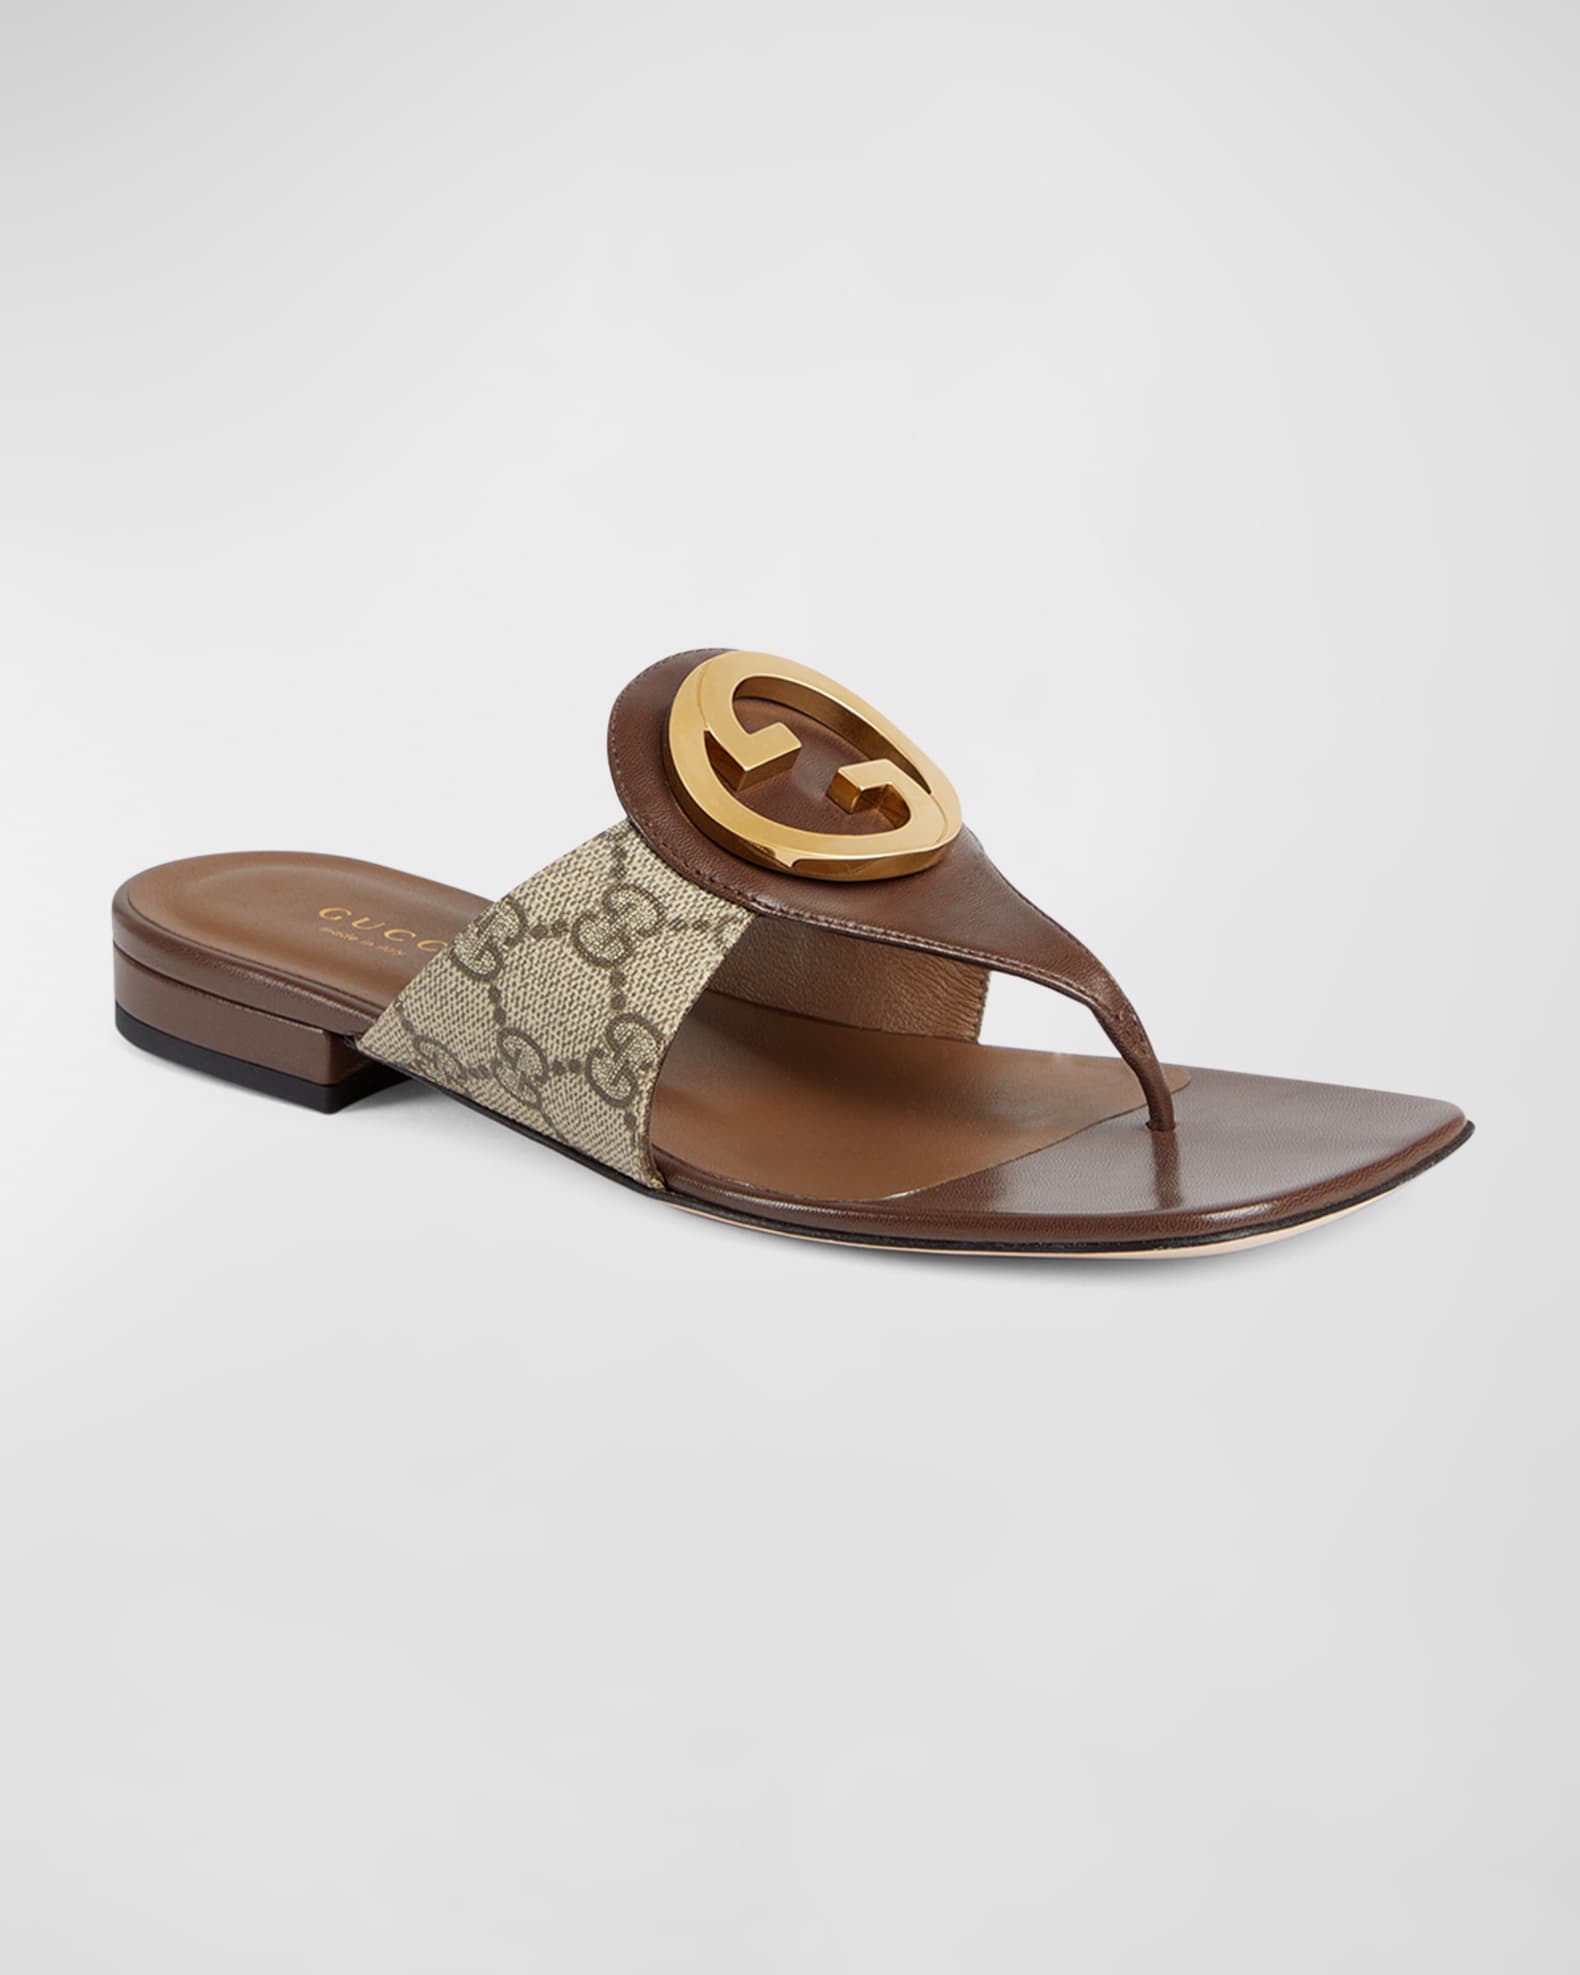 Gucci Blondie Medallion Flat Thong Sandals | Neiman Marcus